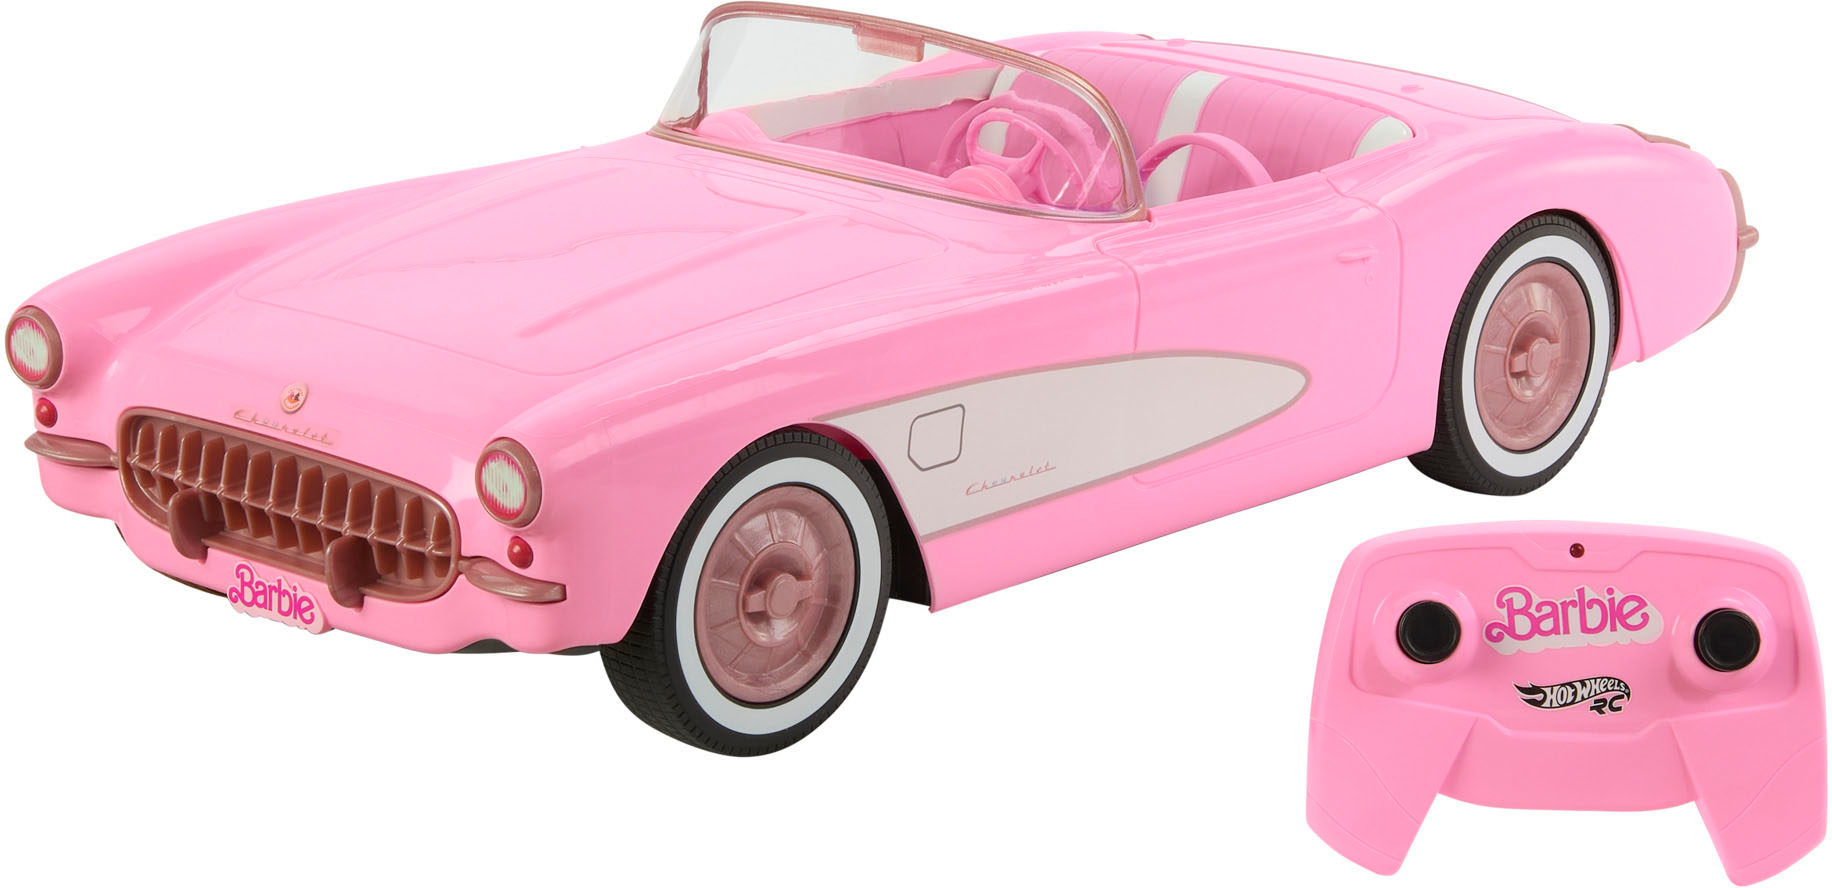 Angle View: Barbie - The Movie Corvette Remote Control Vehicle